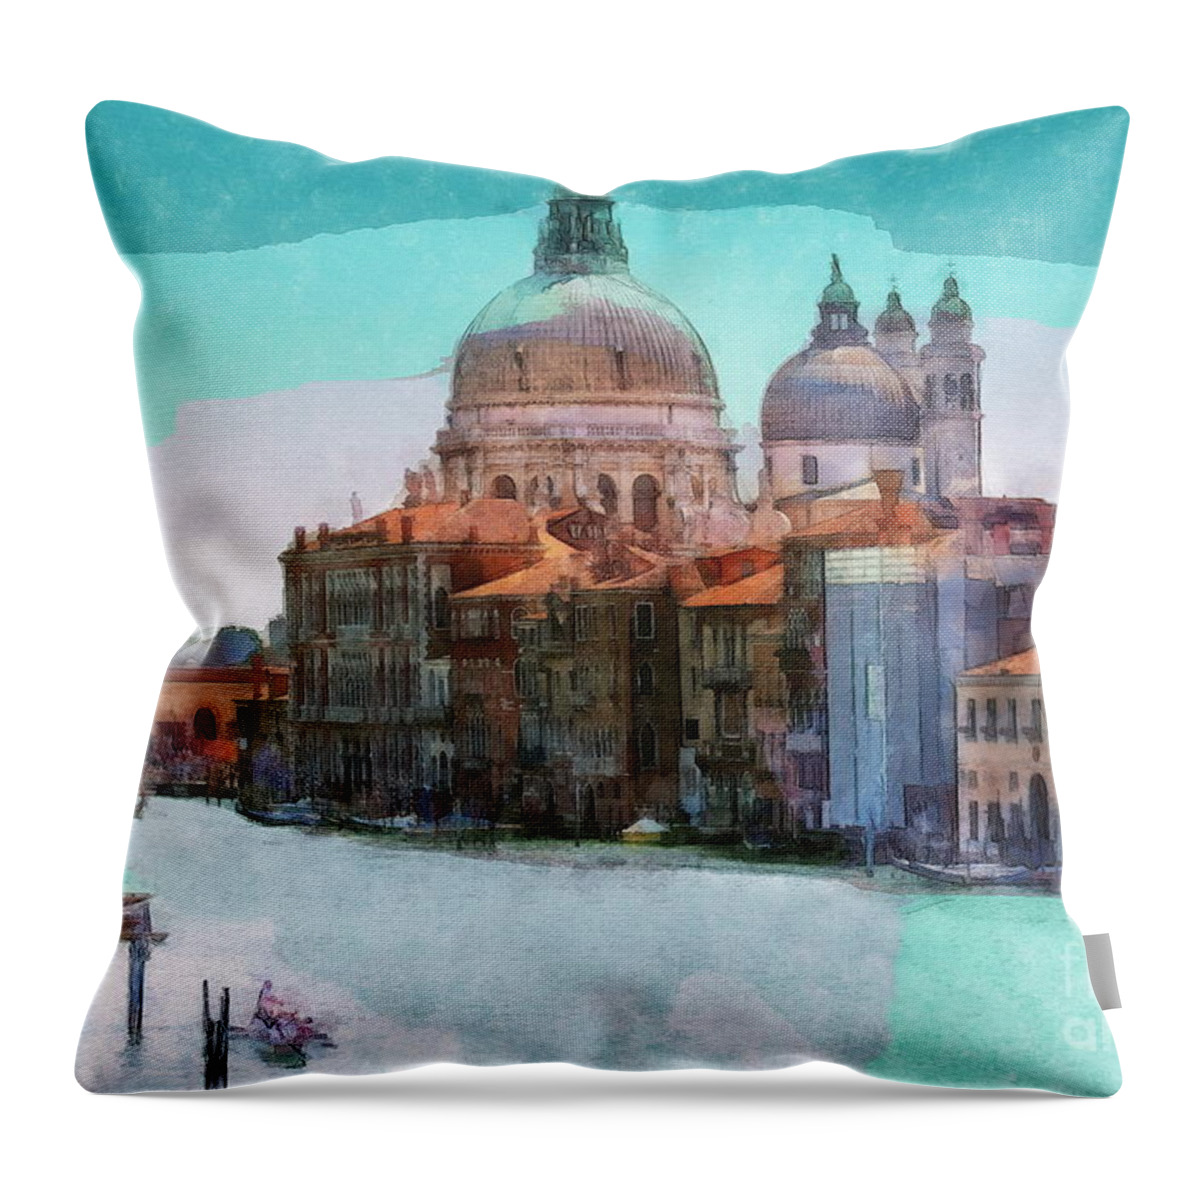 Venice Throw Pillow featuring the digital art Venice Grand Canal #1 by Jerzy Czyz